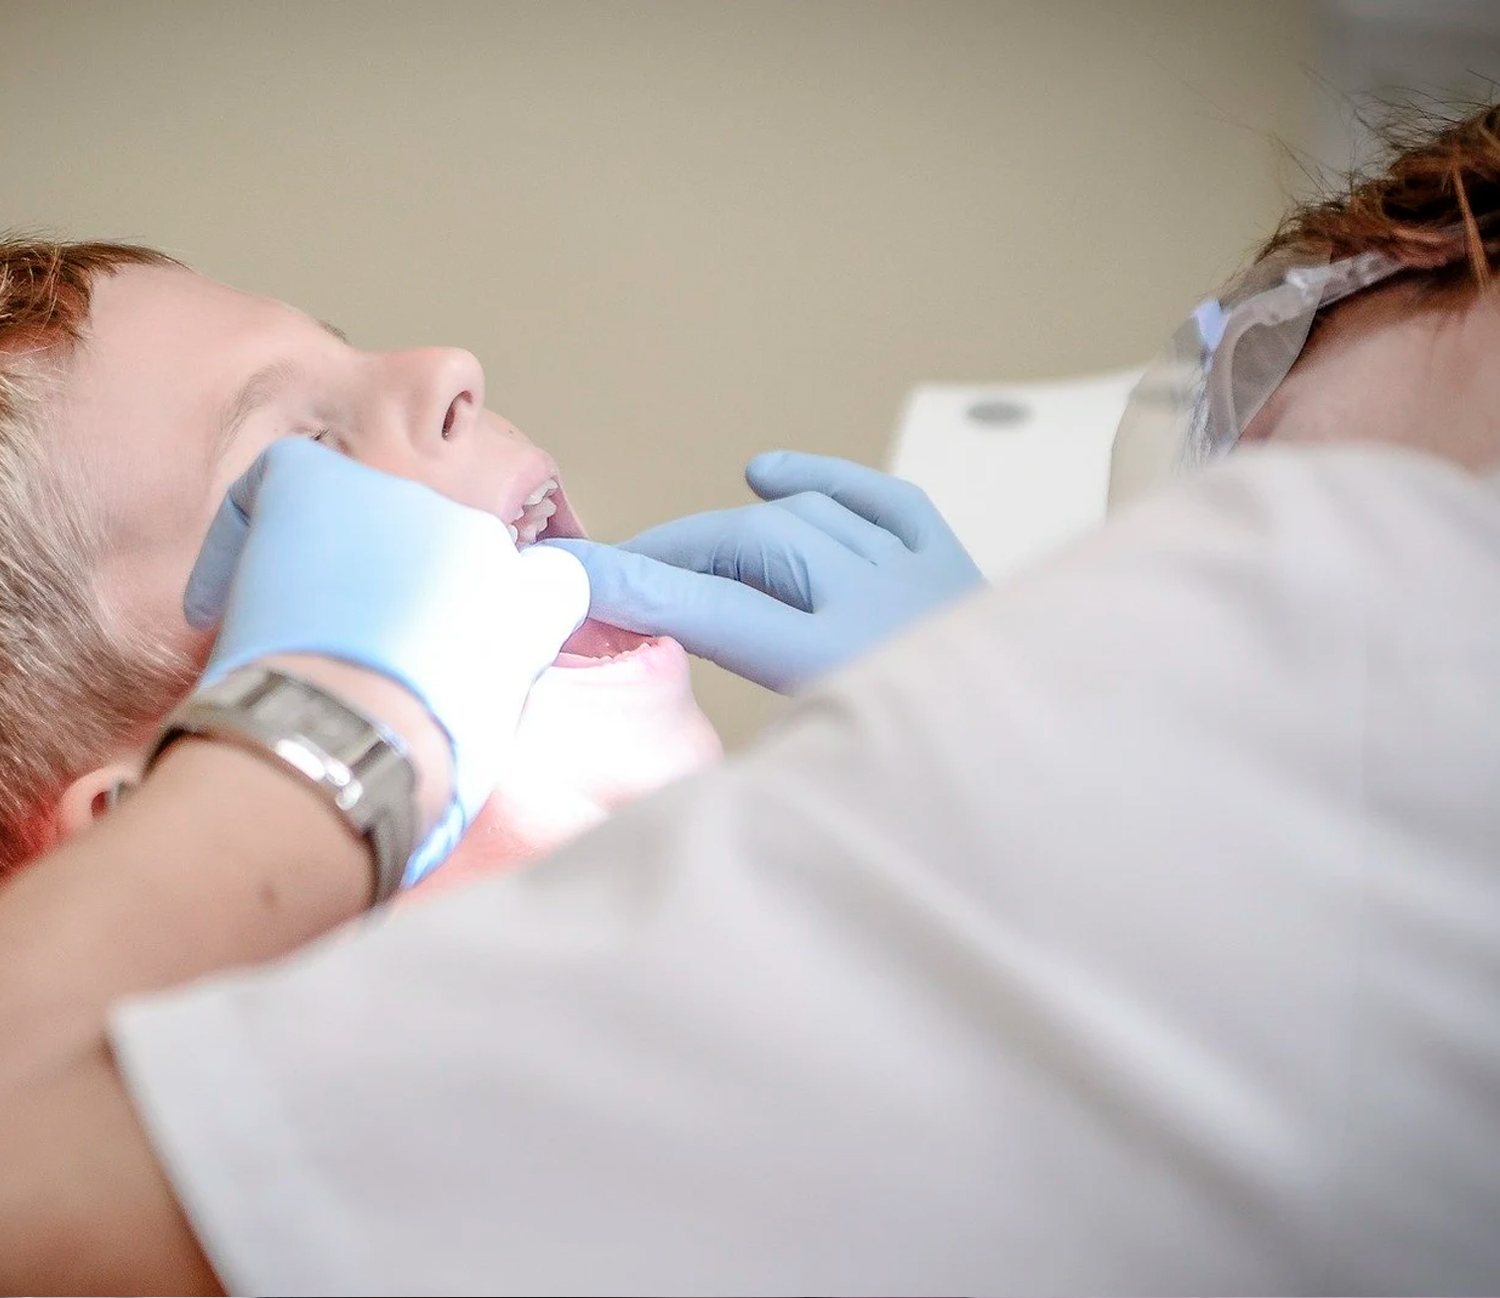 Dentist looks at a child's teeth.